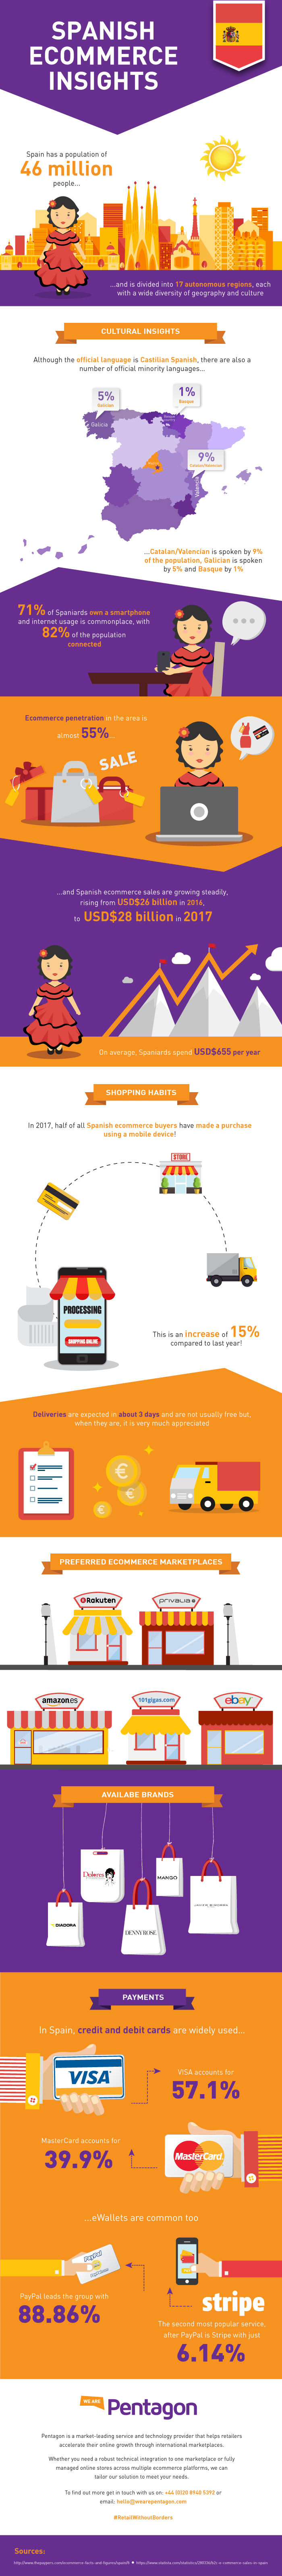 Spanish shopping habits infographic